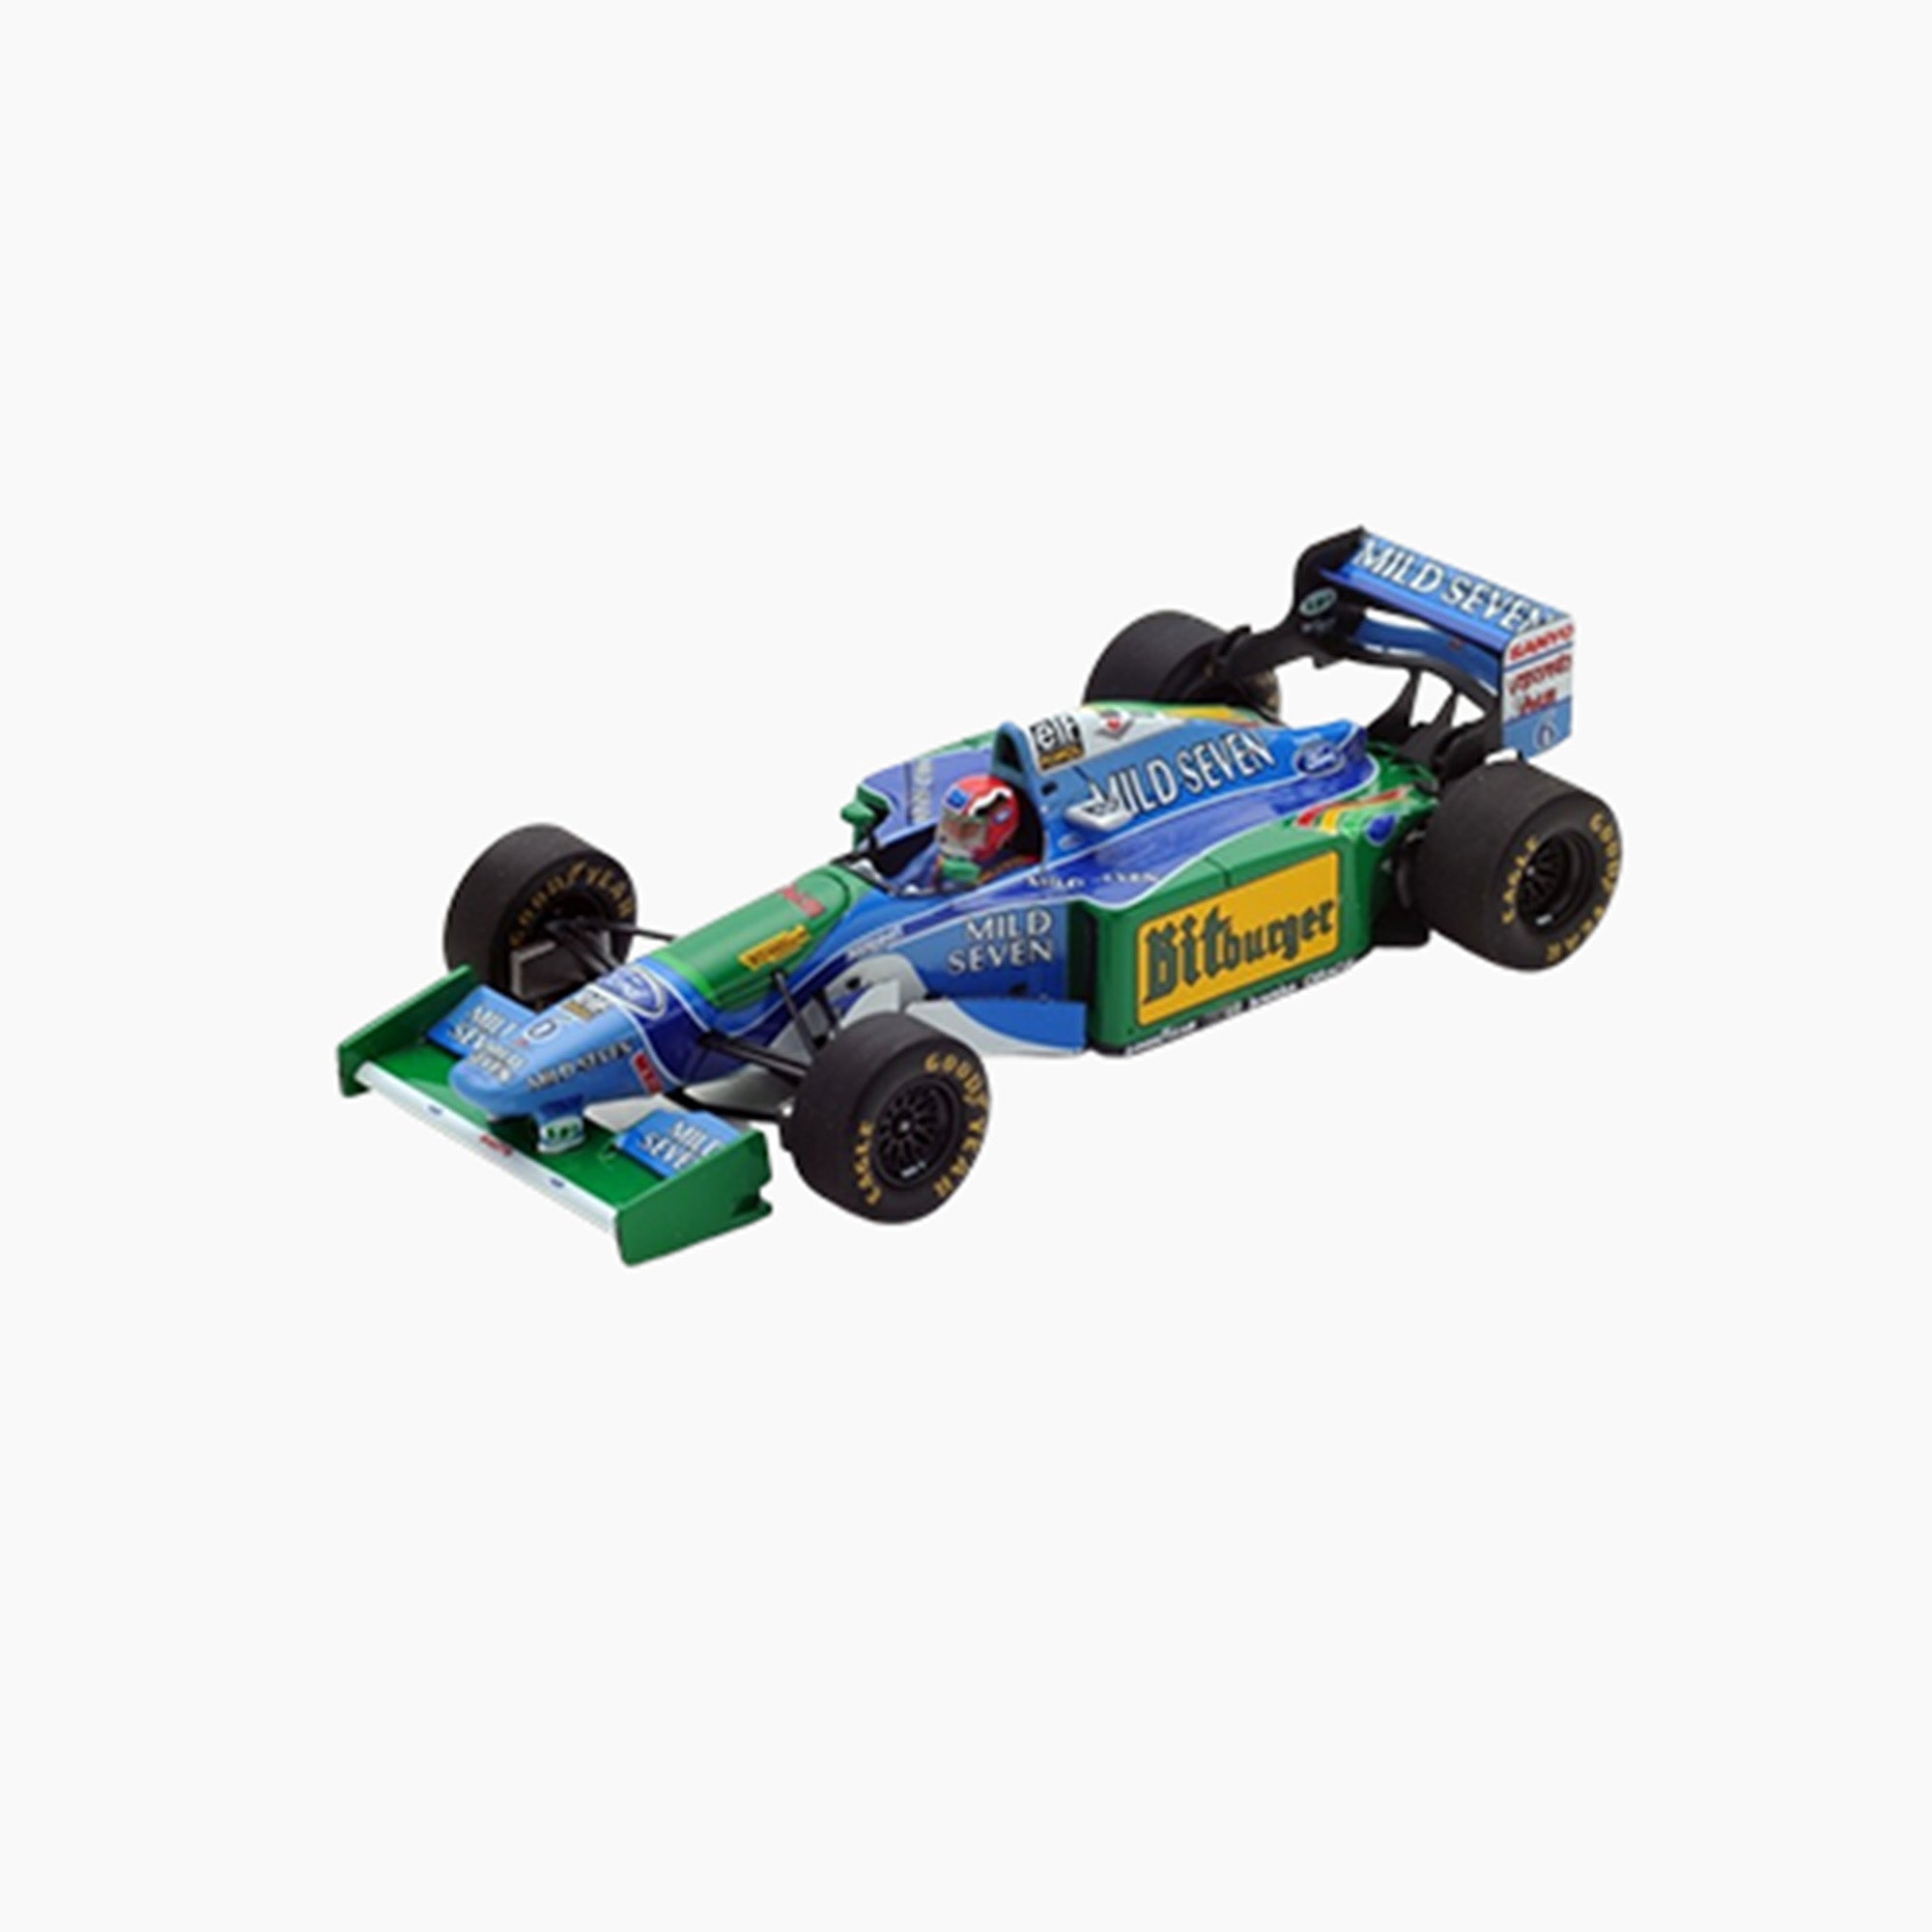 Benetton B194 Australian GP 1994 | 1:43 Scale Model-1:43 Scale Model-Spark Models-gpx-store